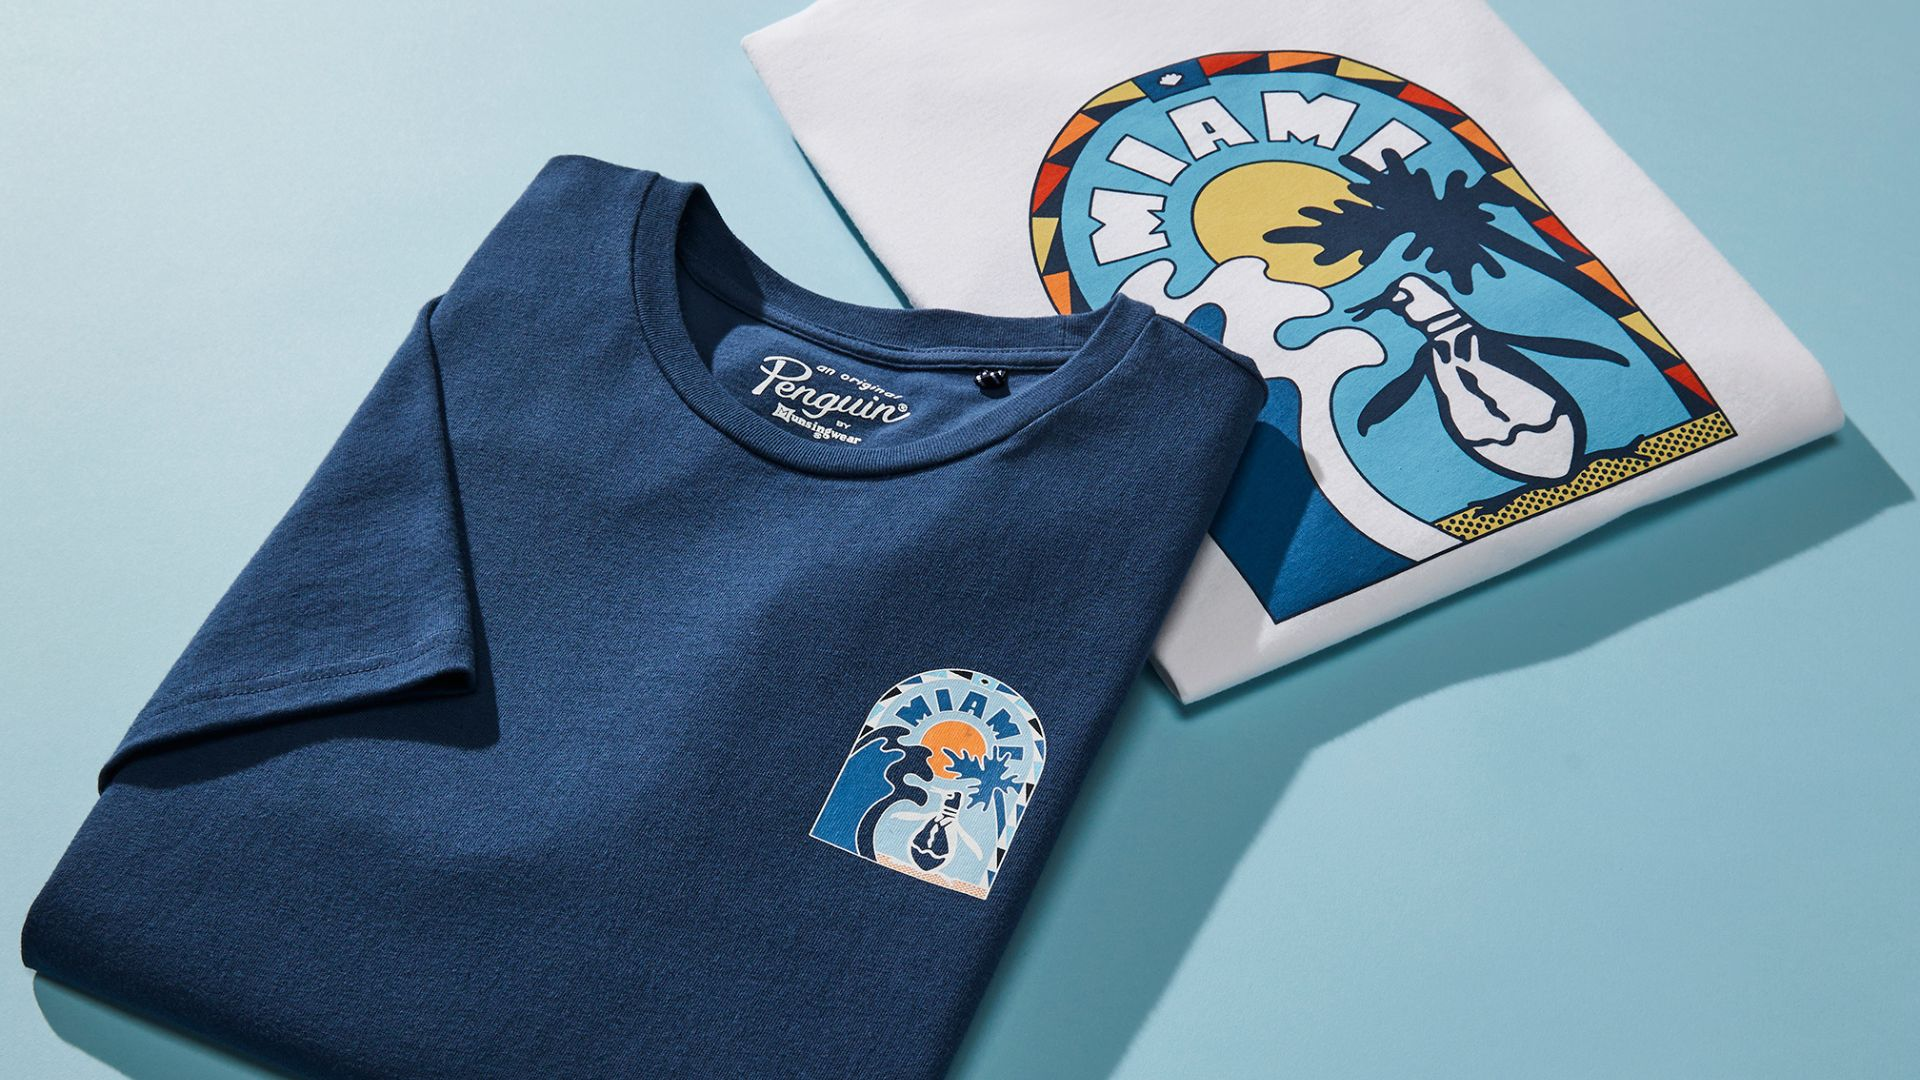 Varias camisetas de Original Penguin sobre un fondo azul